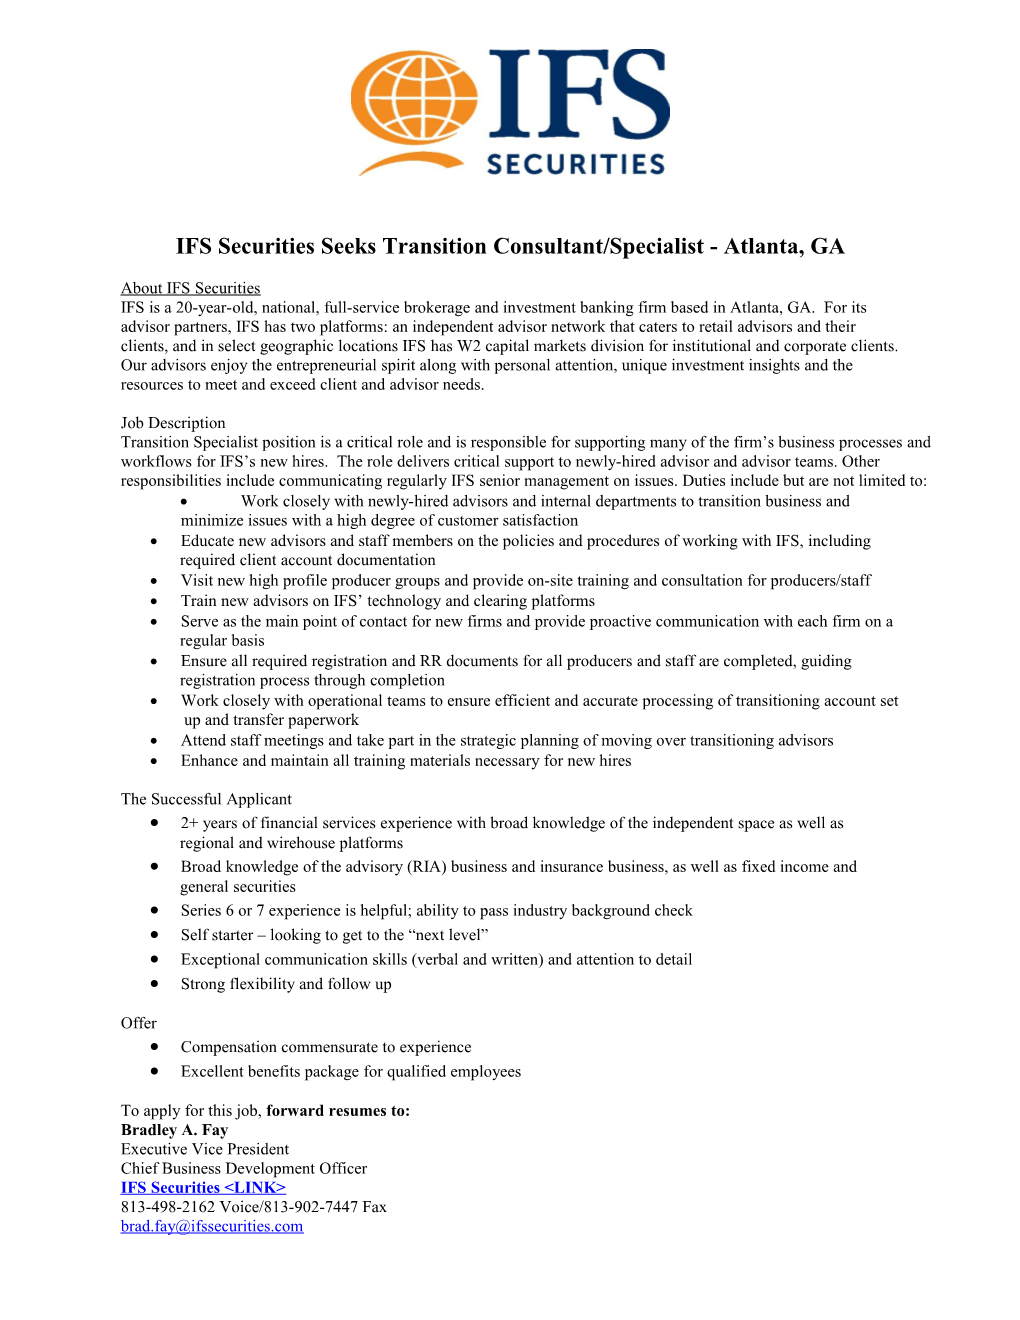 IFS Securities Seeks Transition Consultant/Specialist - Atlanta, GA